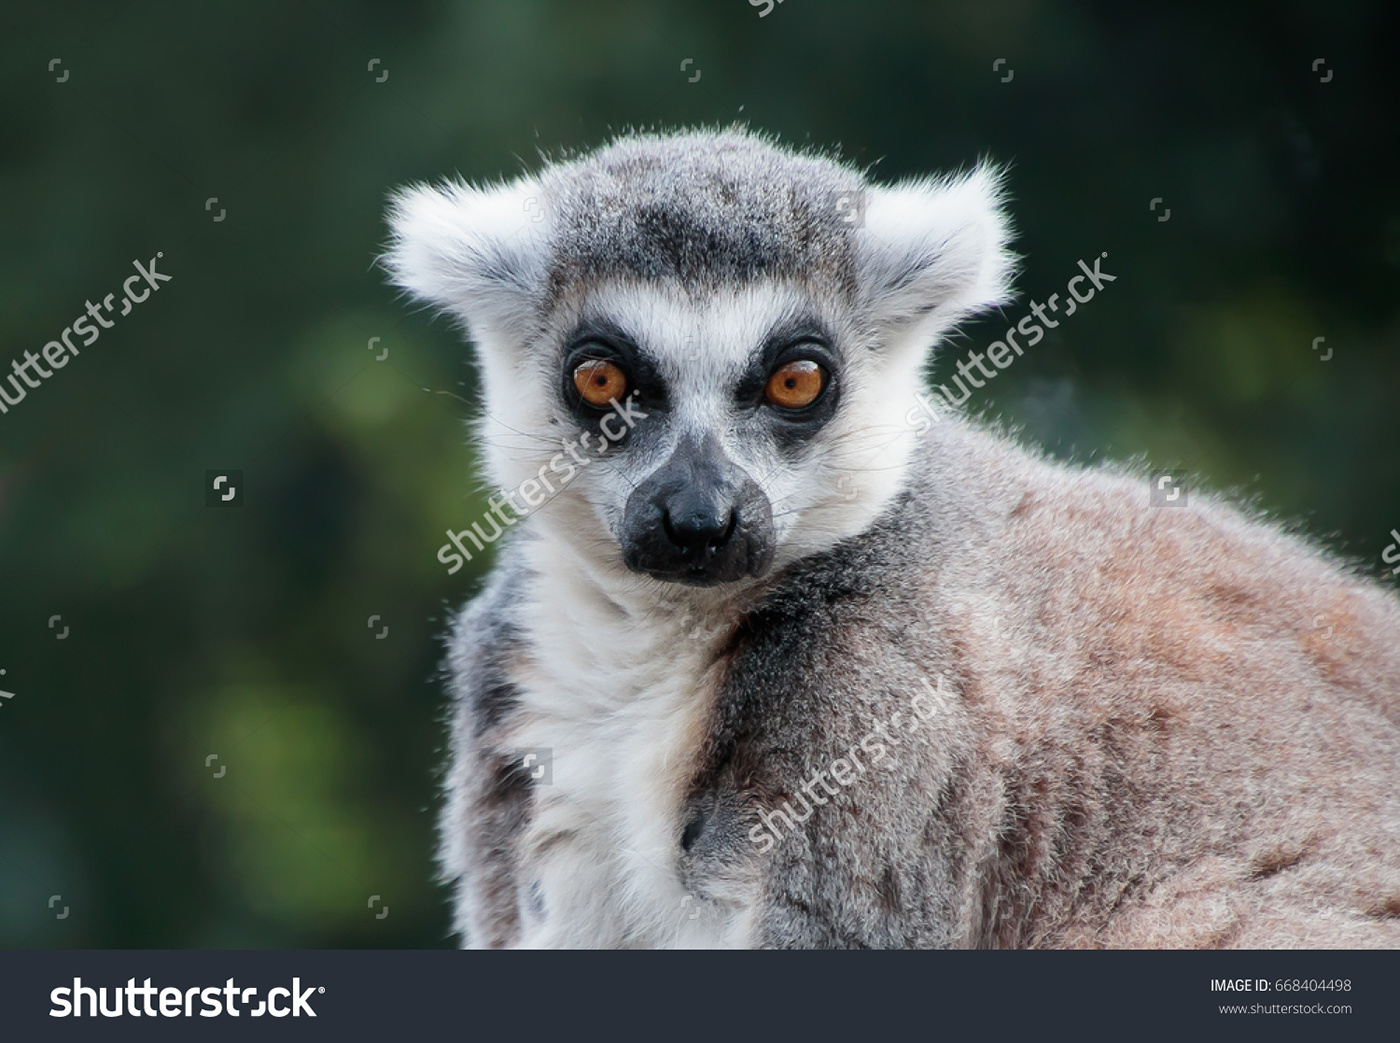 eagle monkey giraffe Polar Bear frog lemur